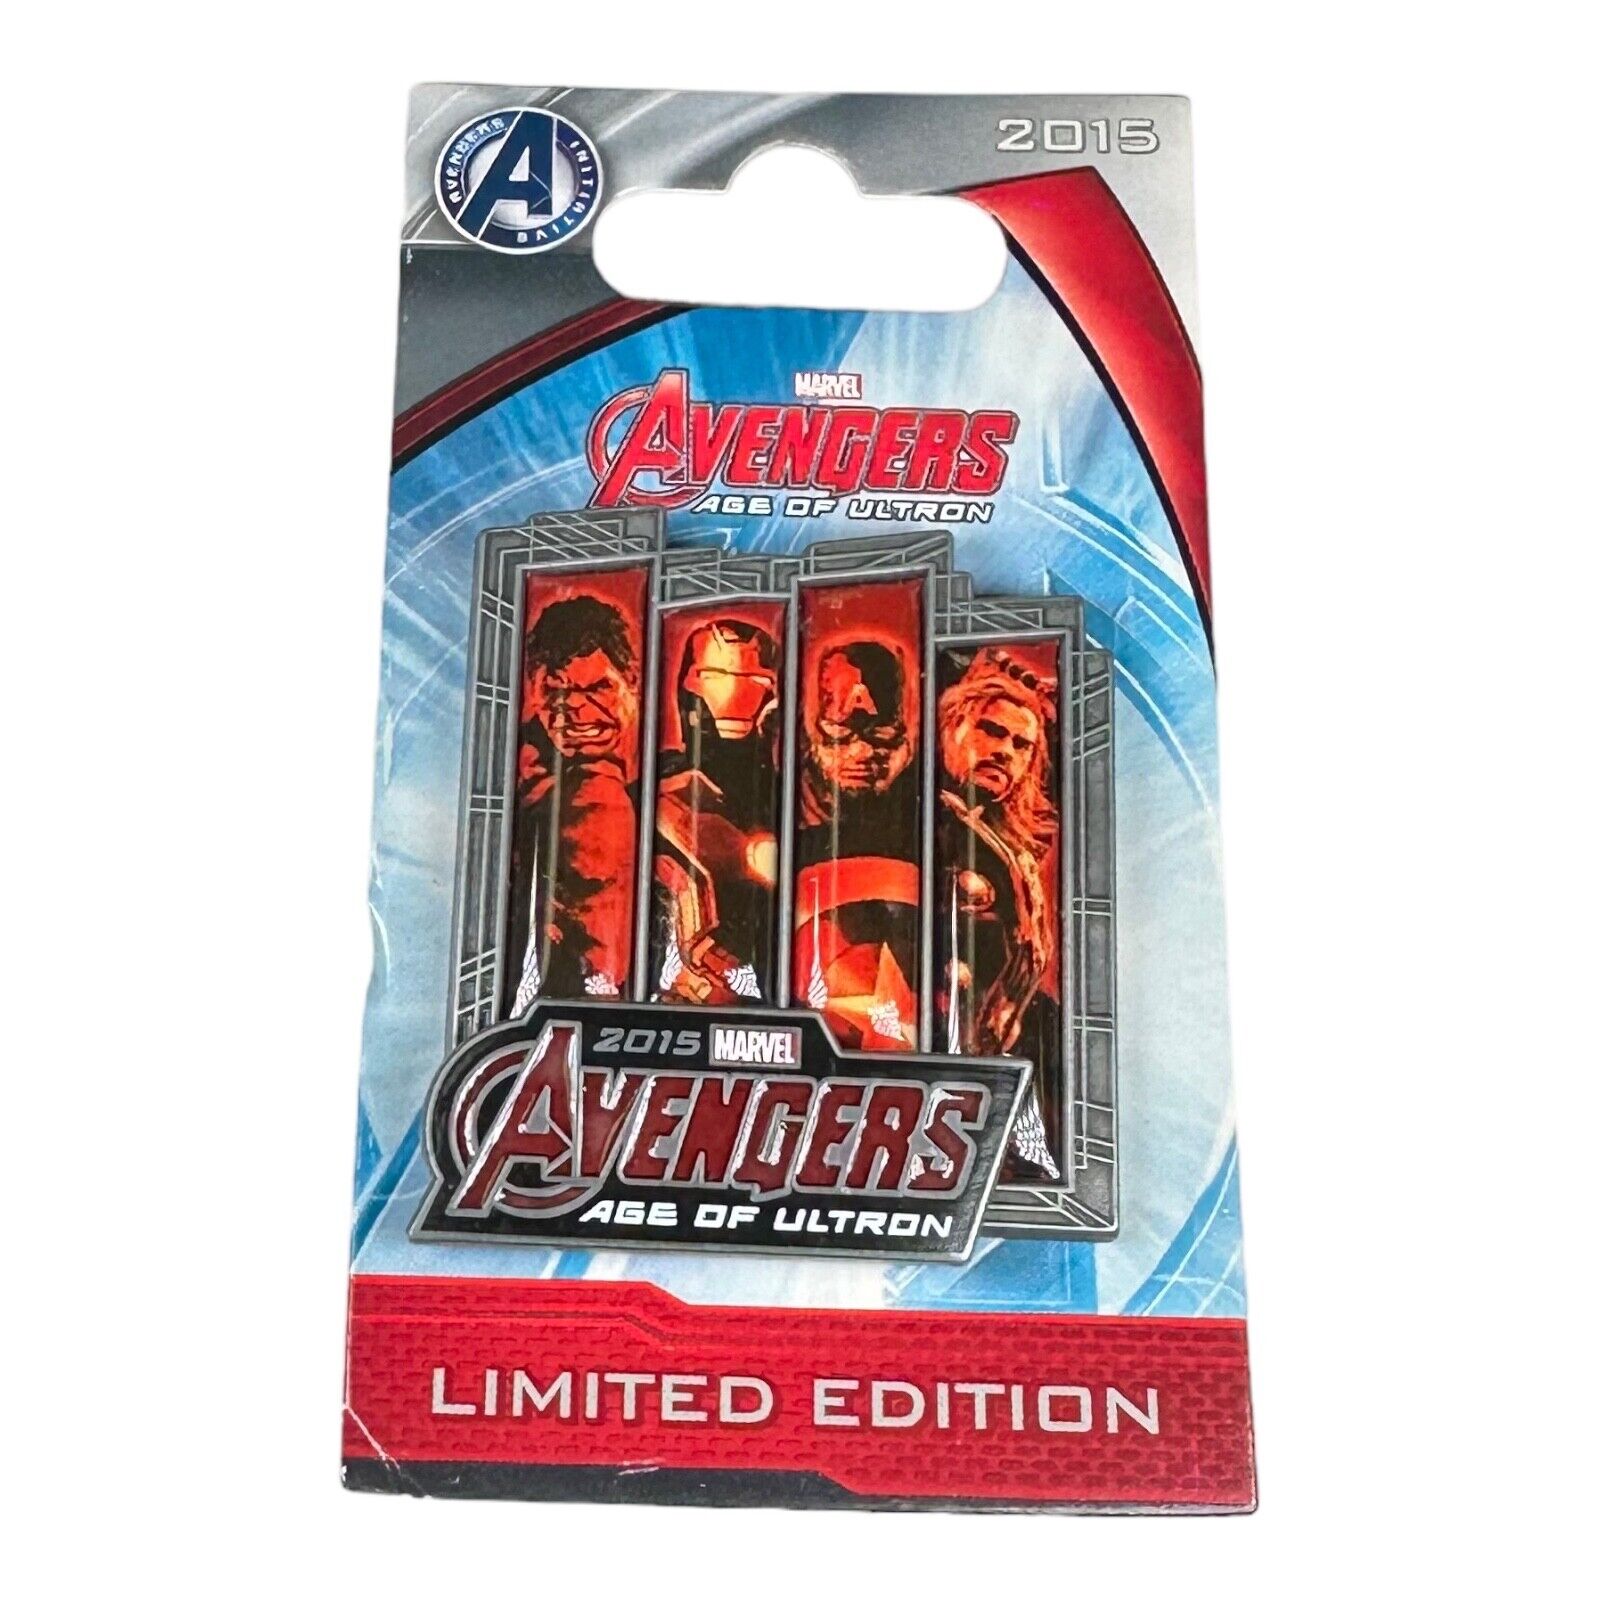 2015 Disney Parks Marvel Avengers Age of Ultron Pin